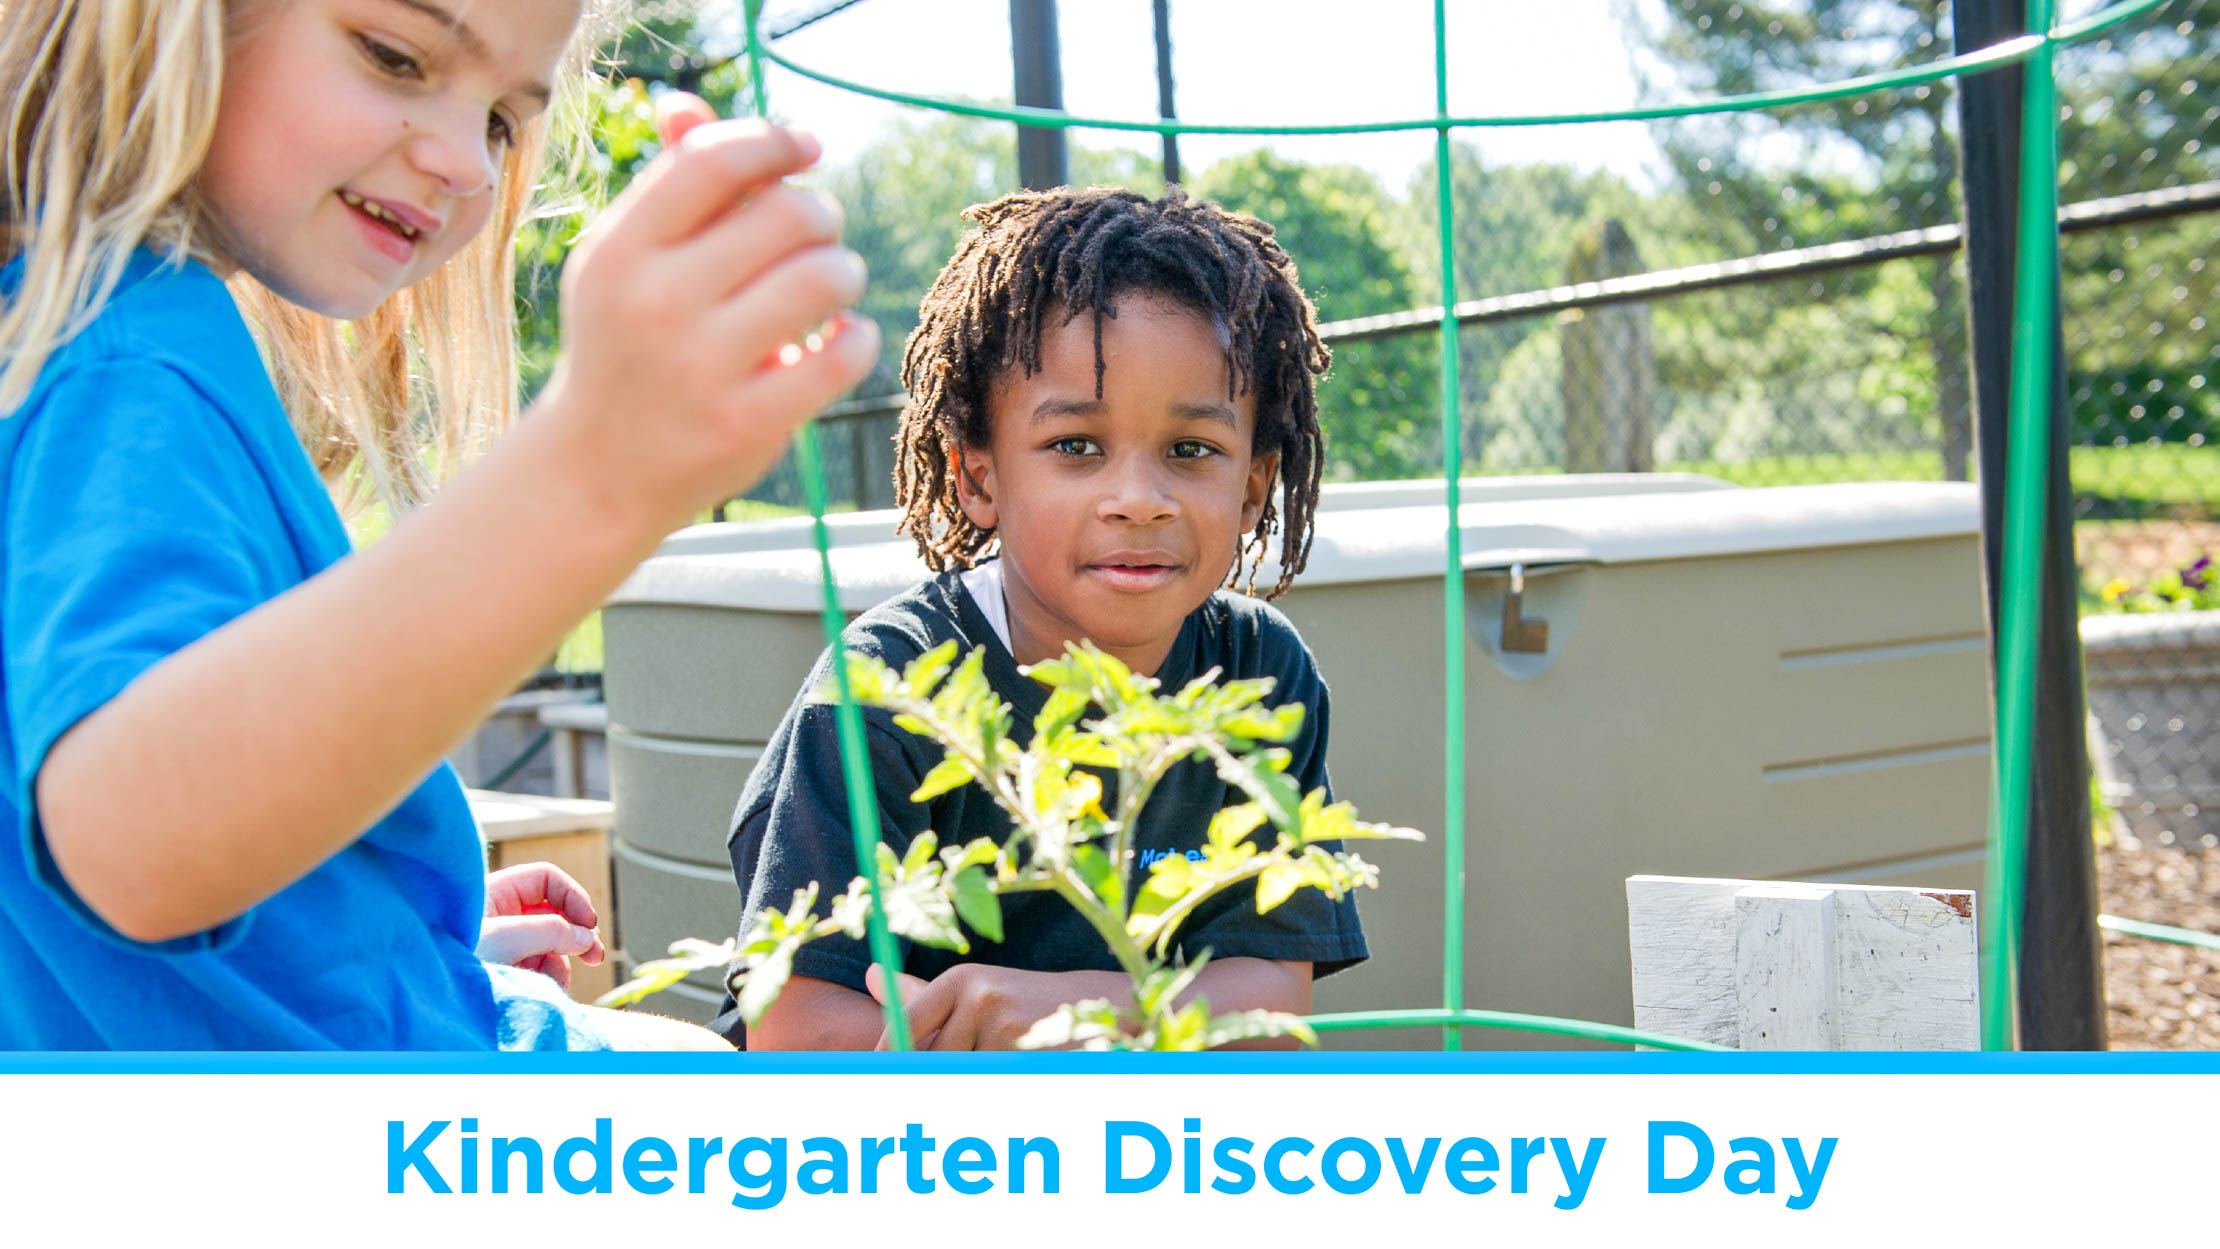 Kids garden during Kindergarten Discovery Day